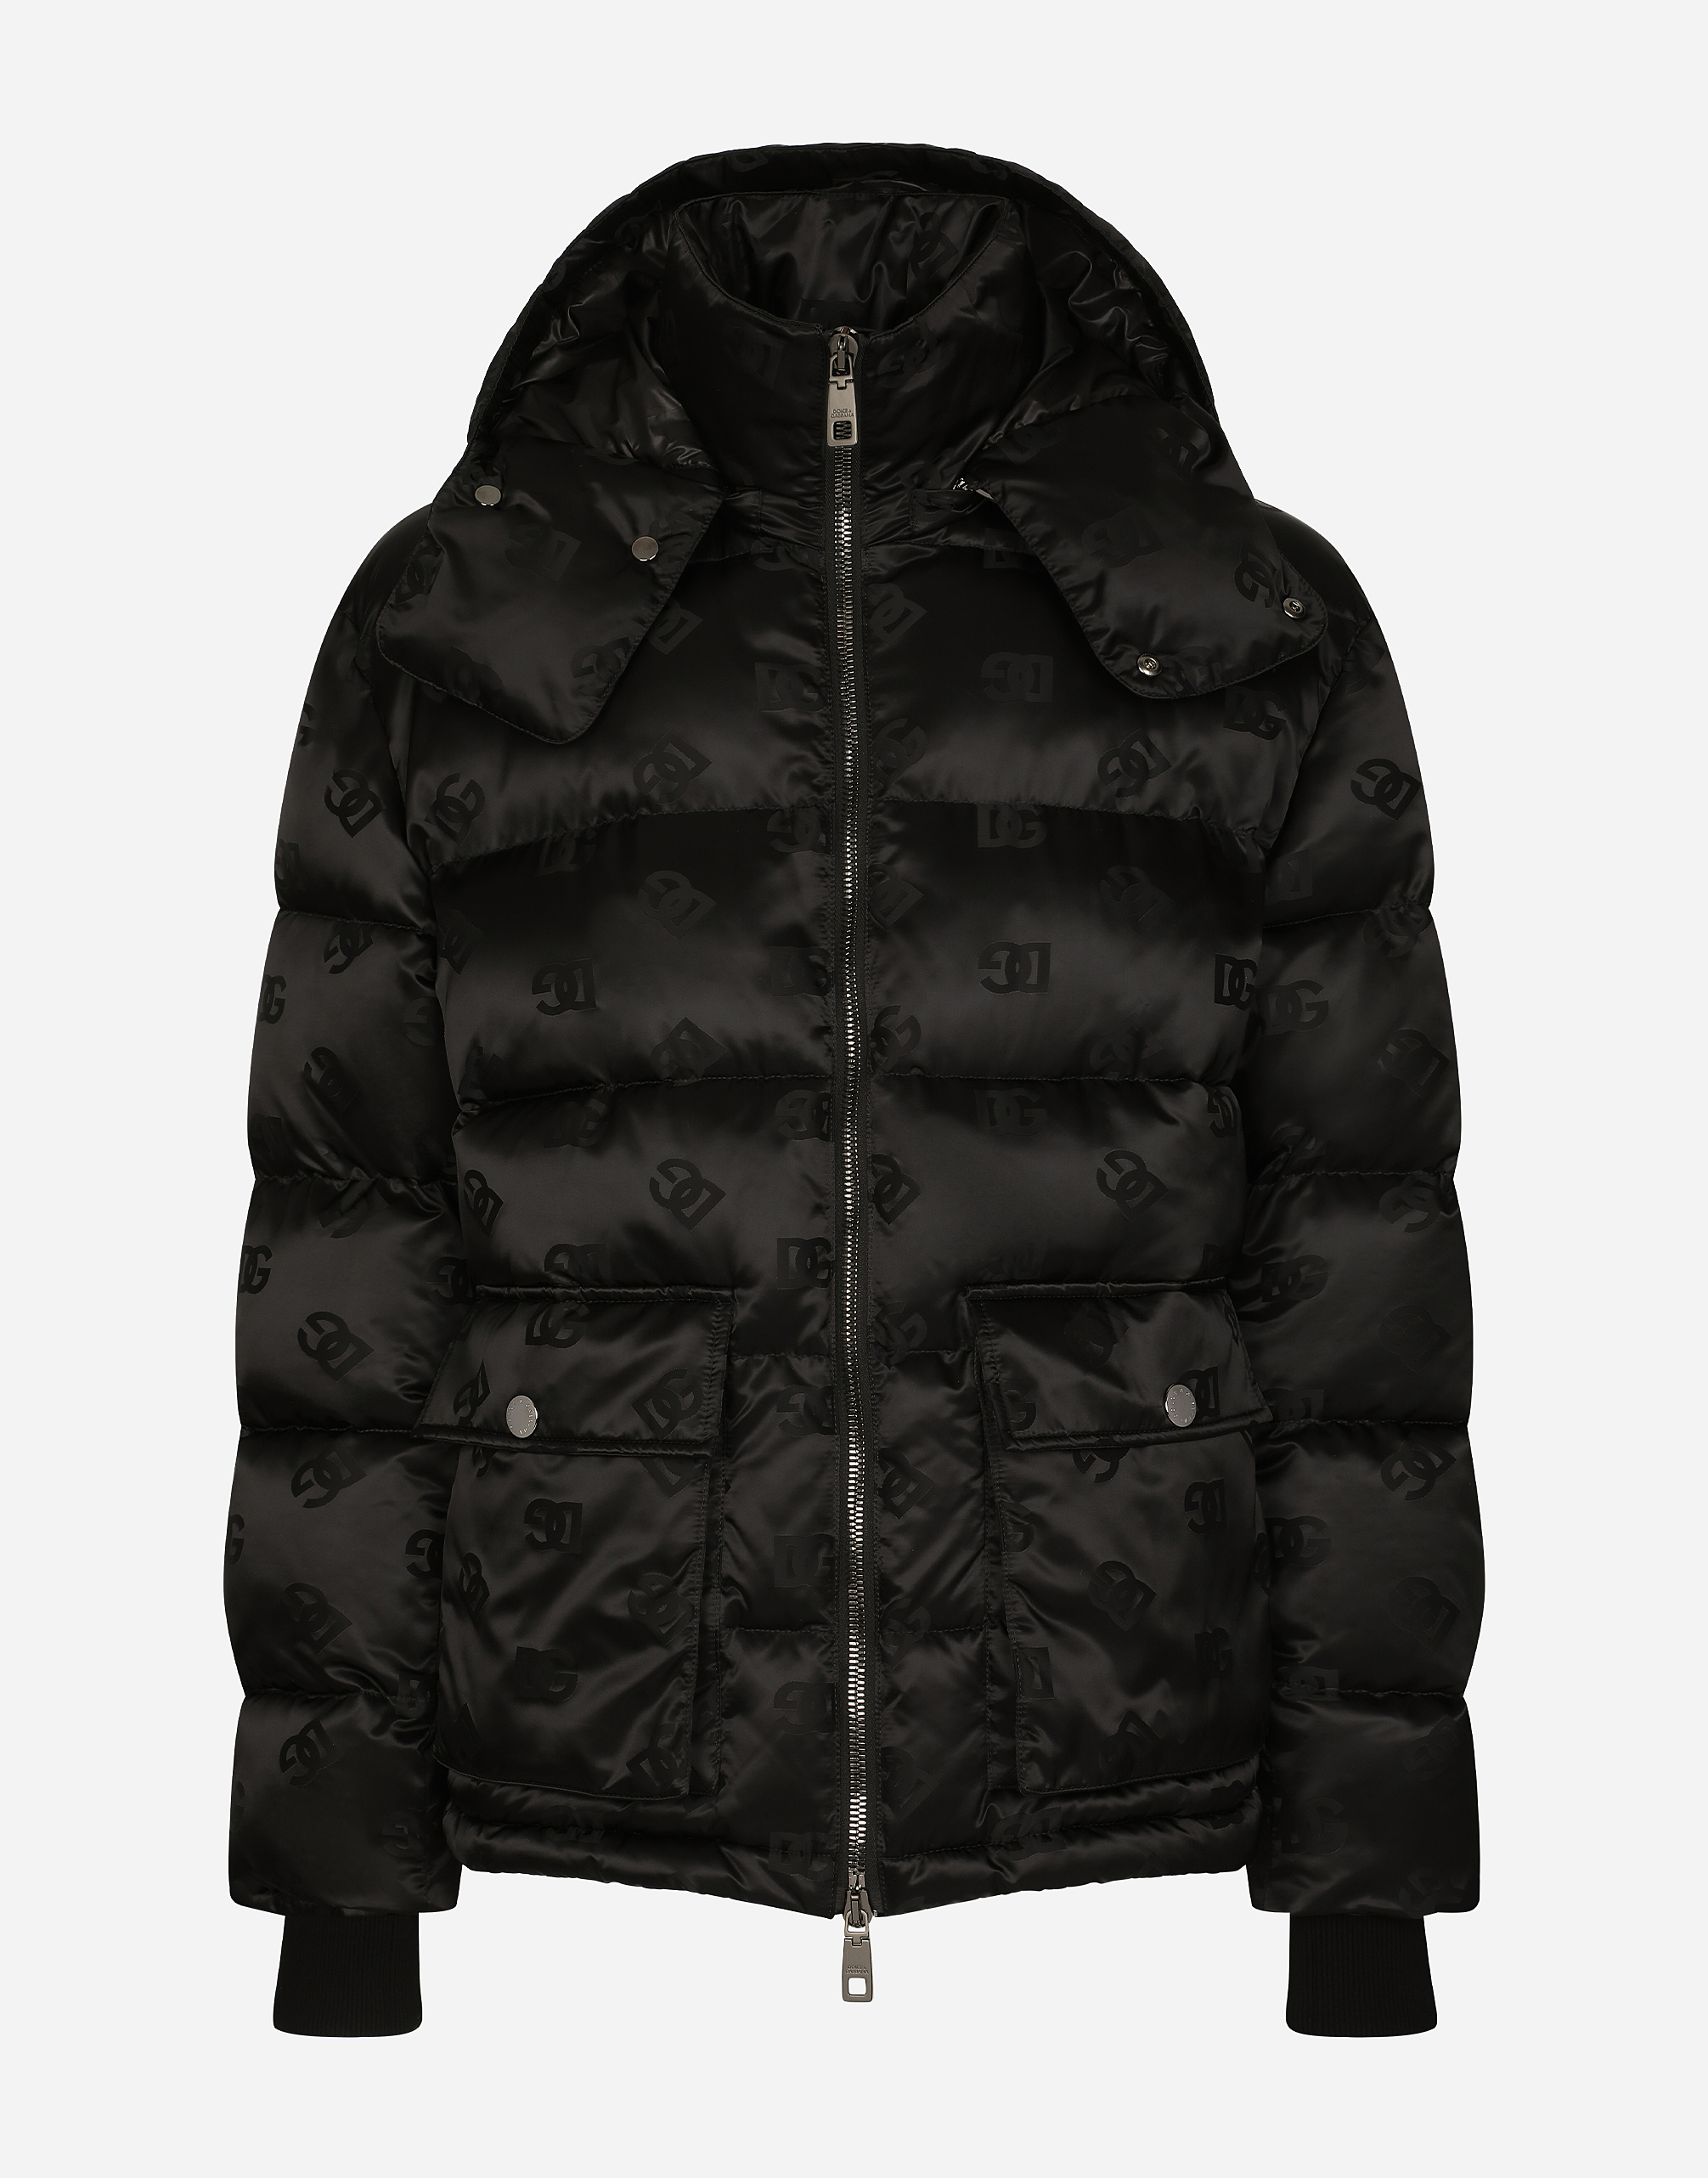 DG satin jacquard jacket with hood in Black